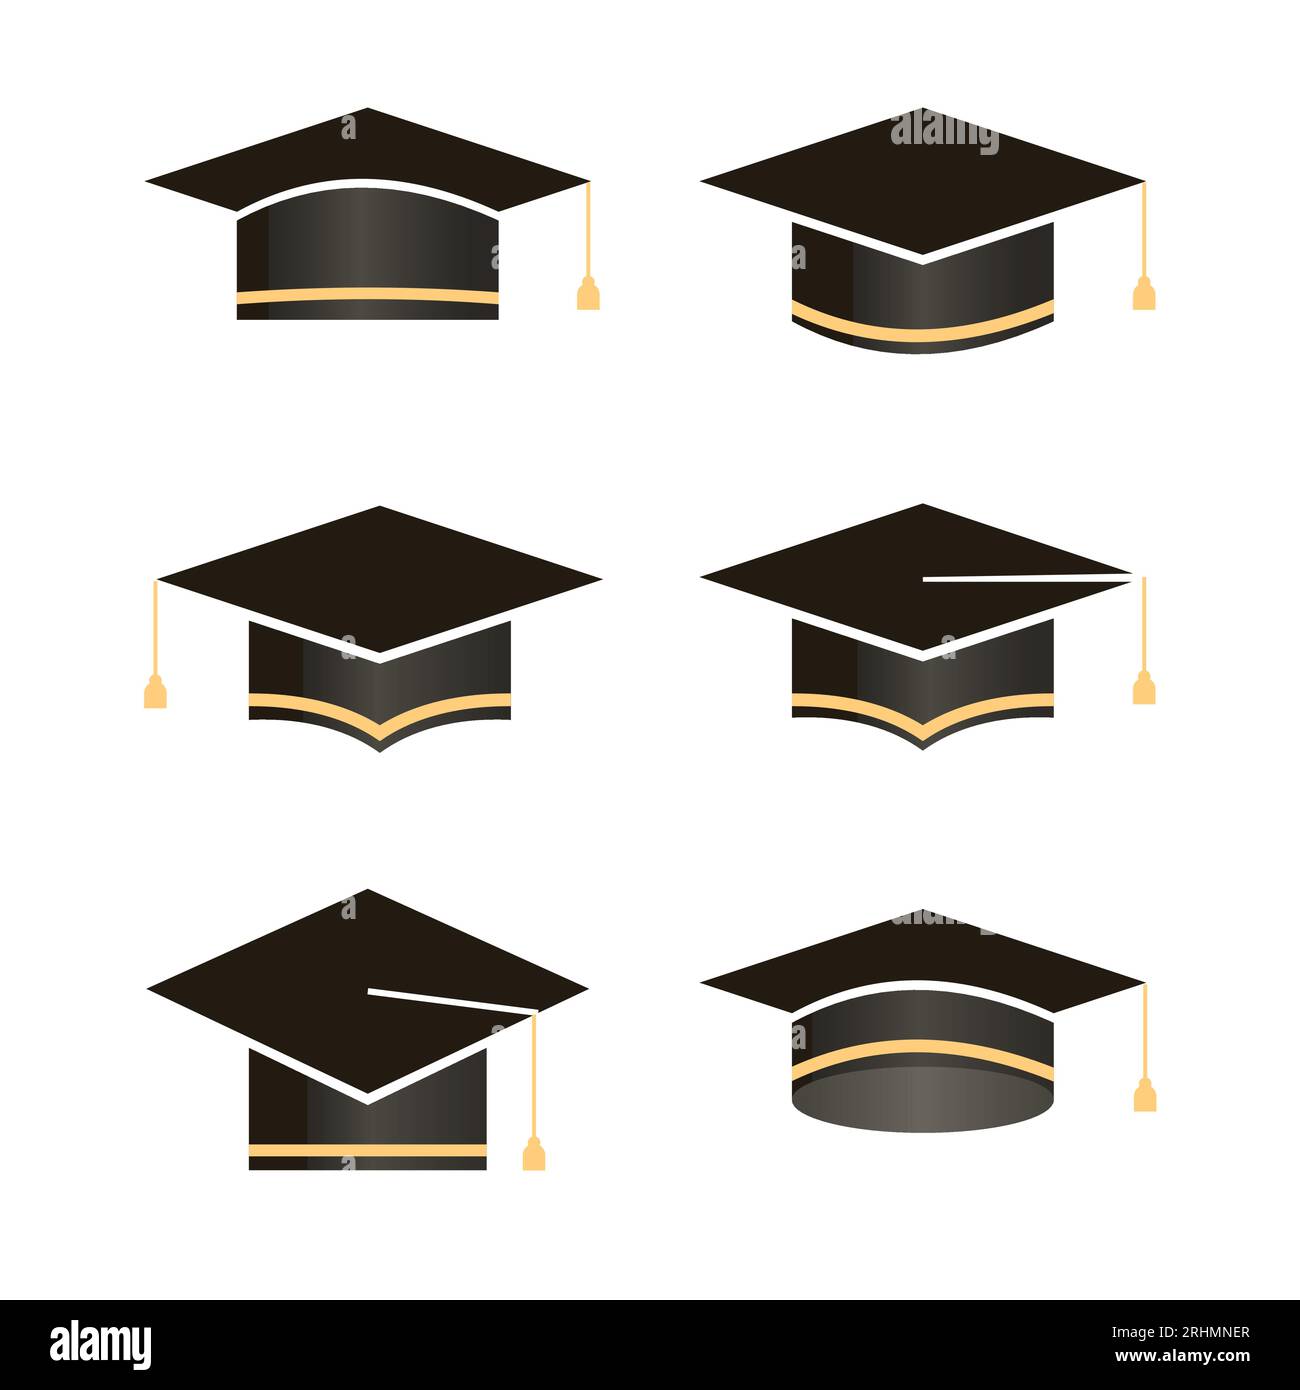 Golden graduation Cut Out Stock Images & Pictures - Alamy